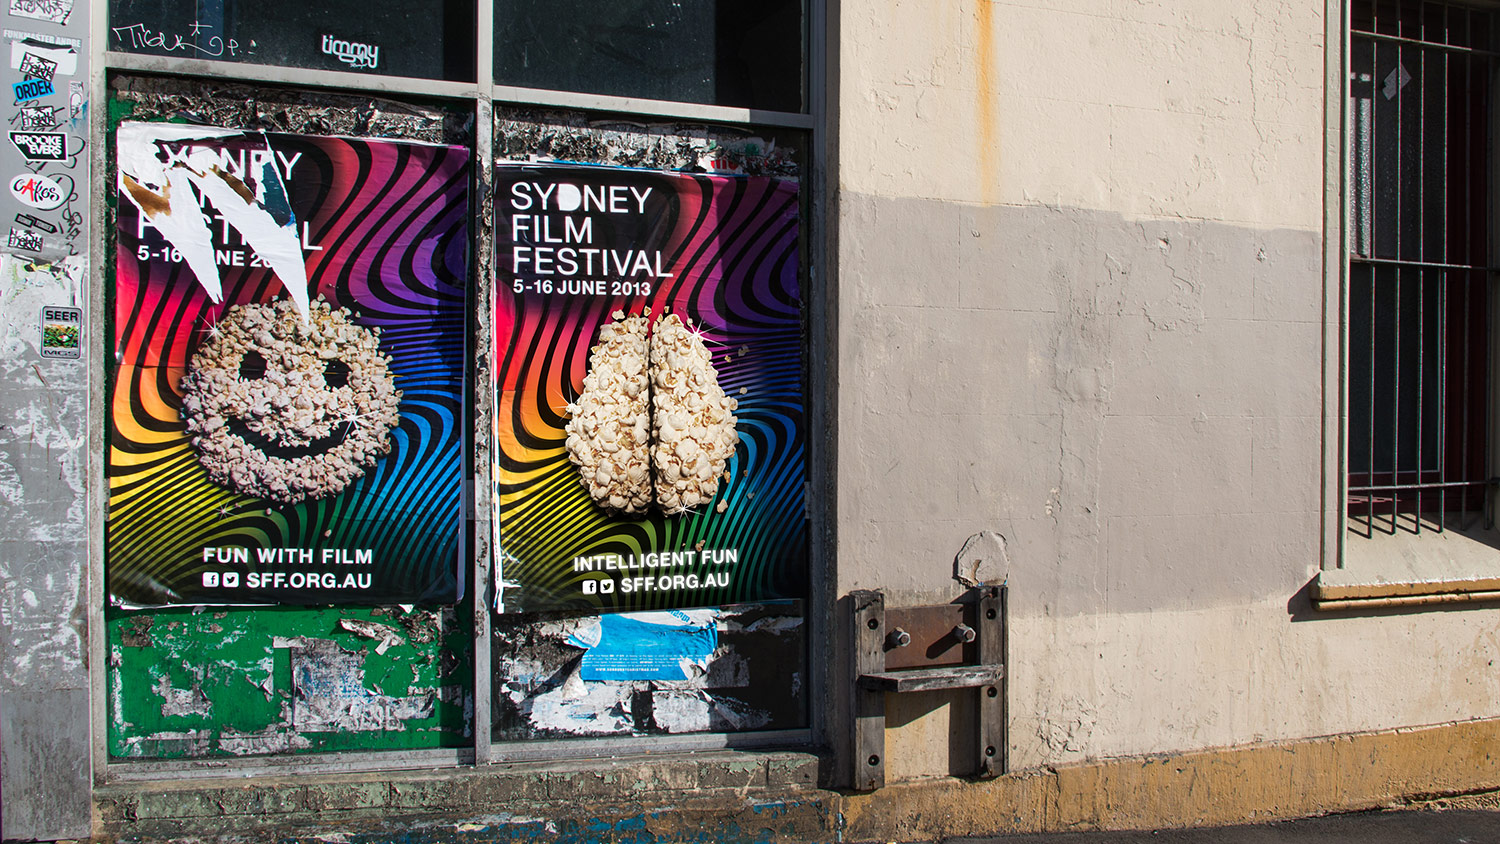 Sydney Film Festival Campaign, 2013